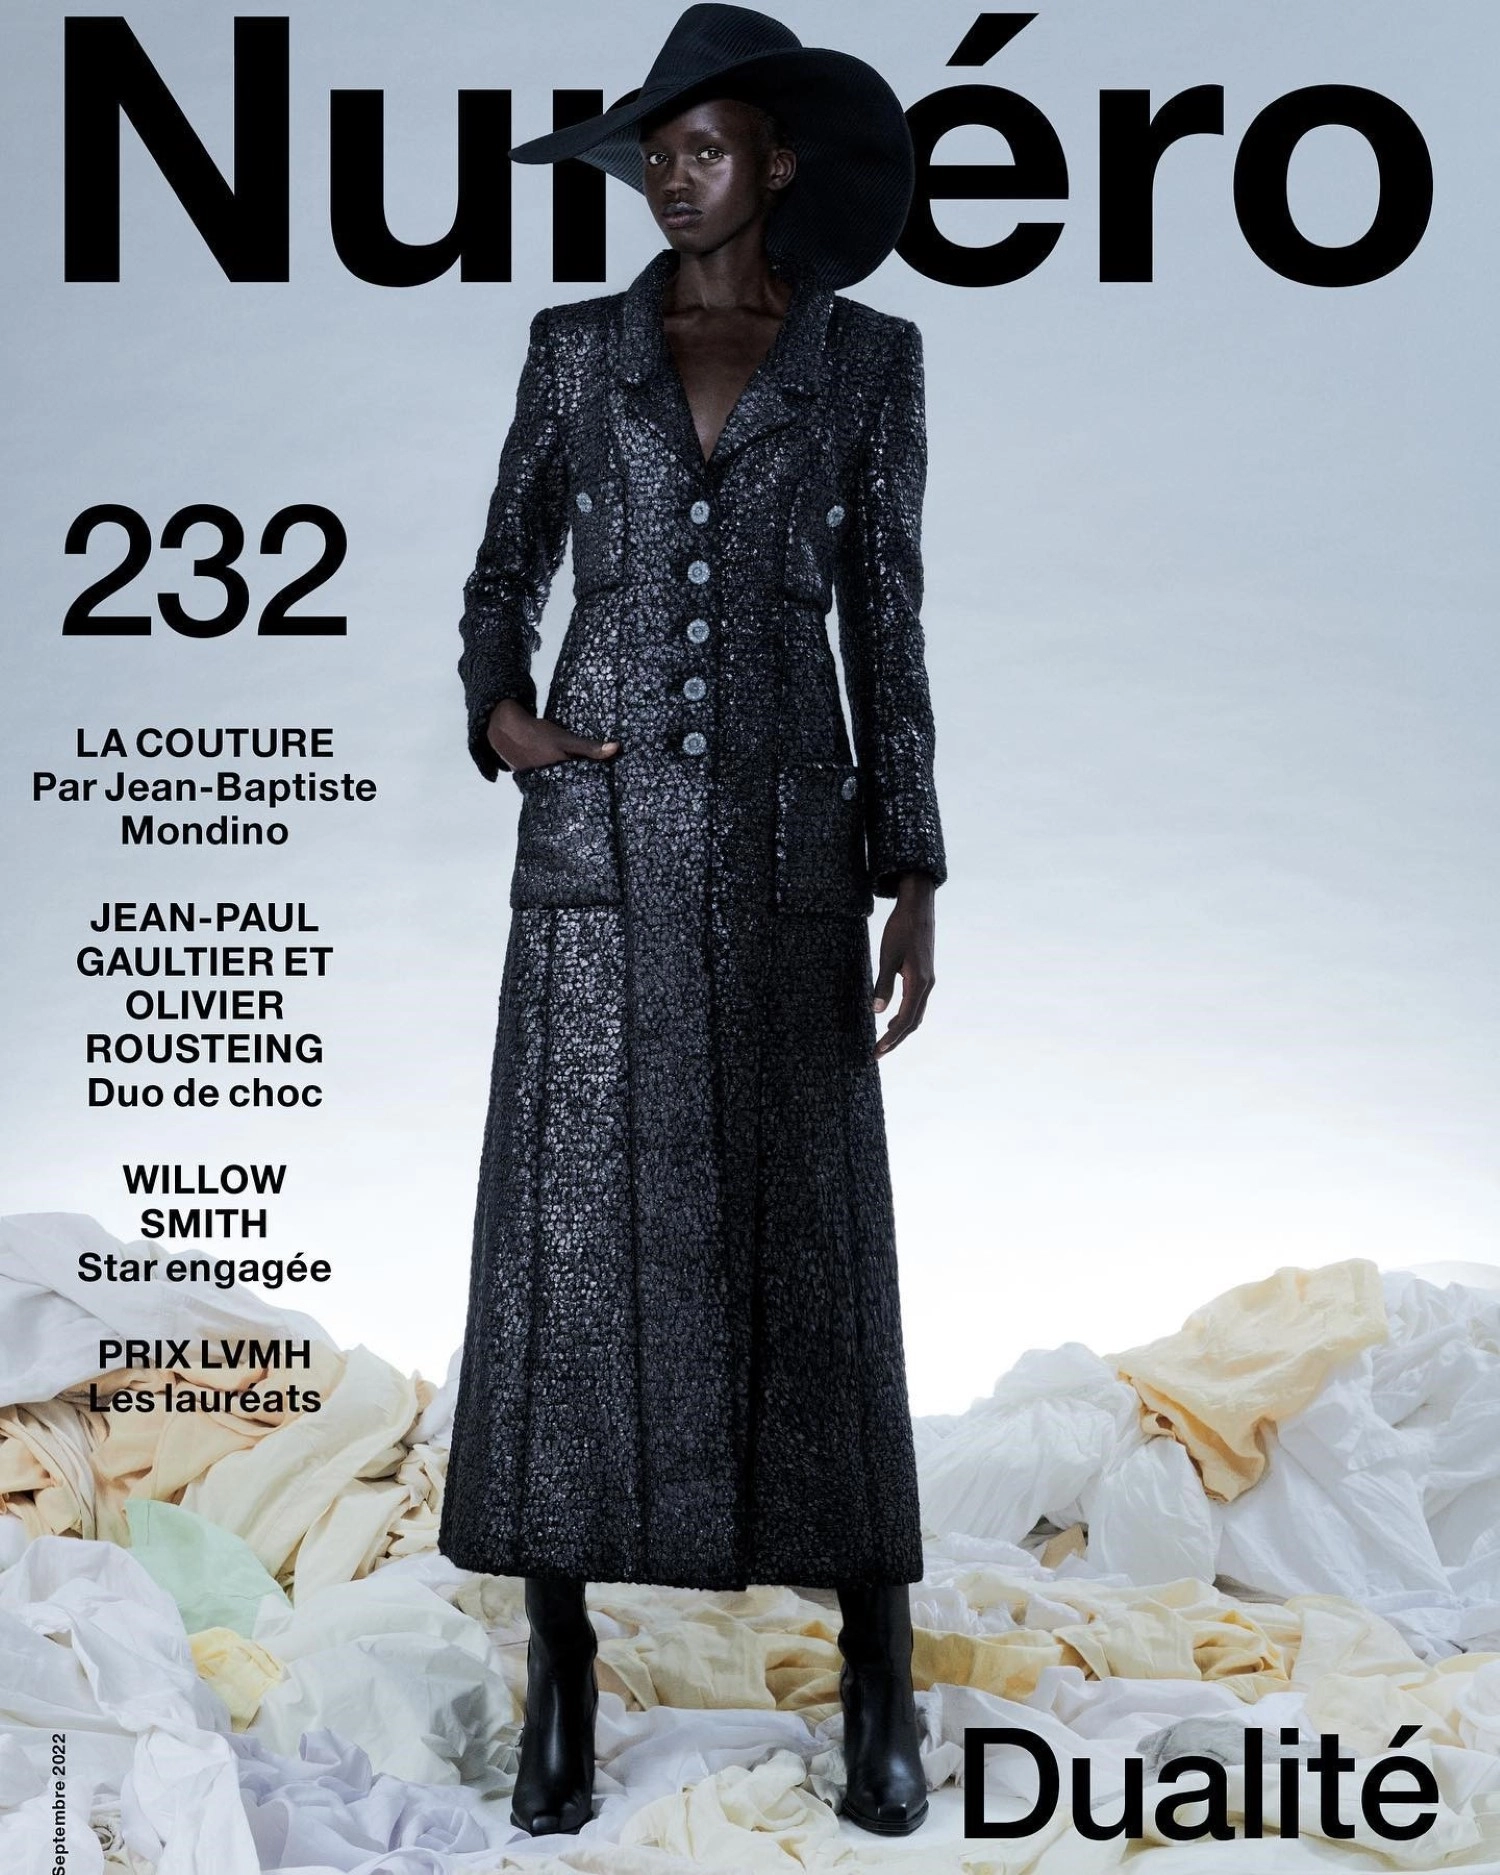 Numéro September 2022 covers by Jean-Baptiste Mondino